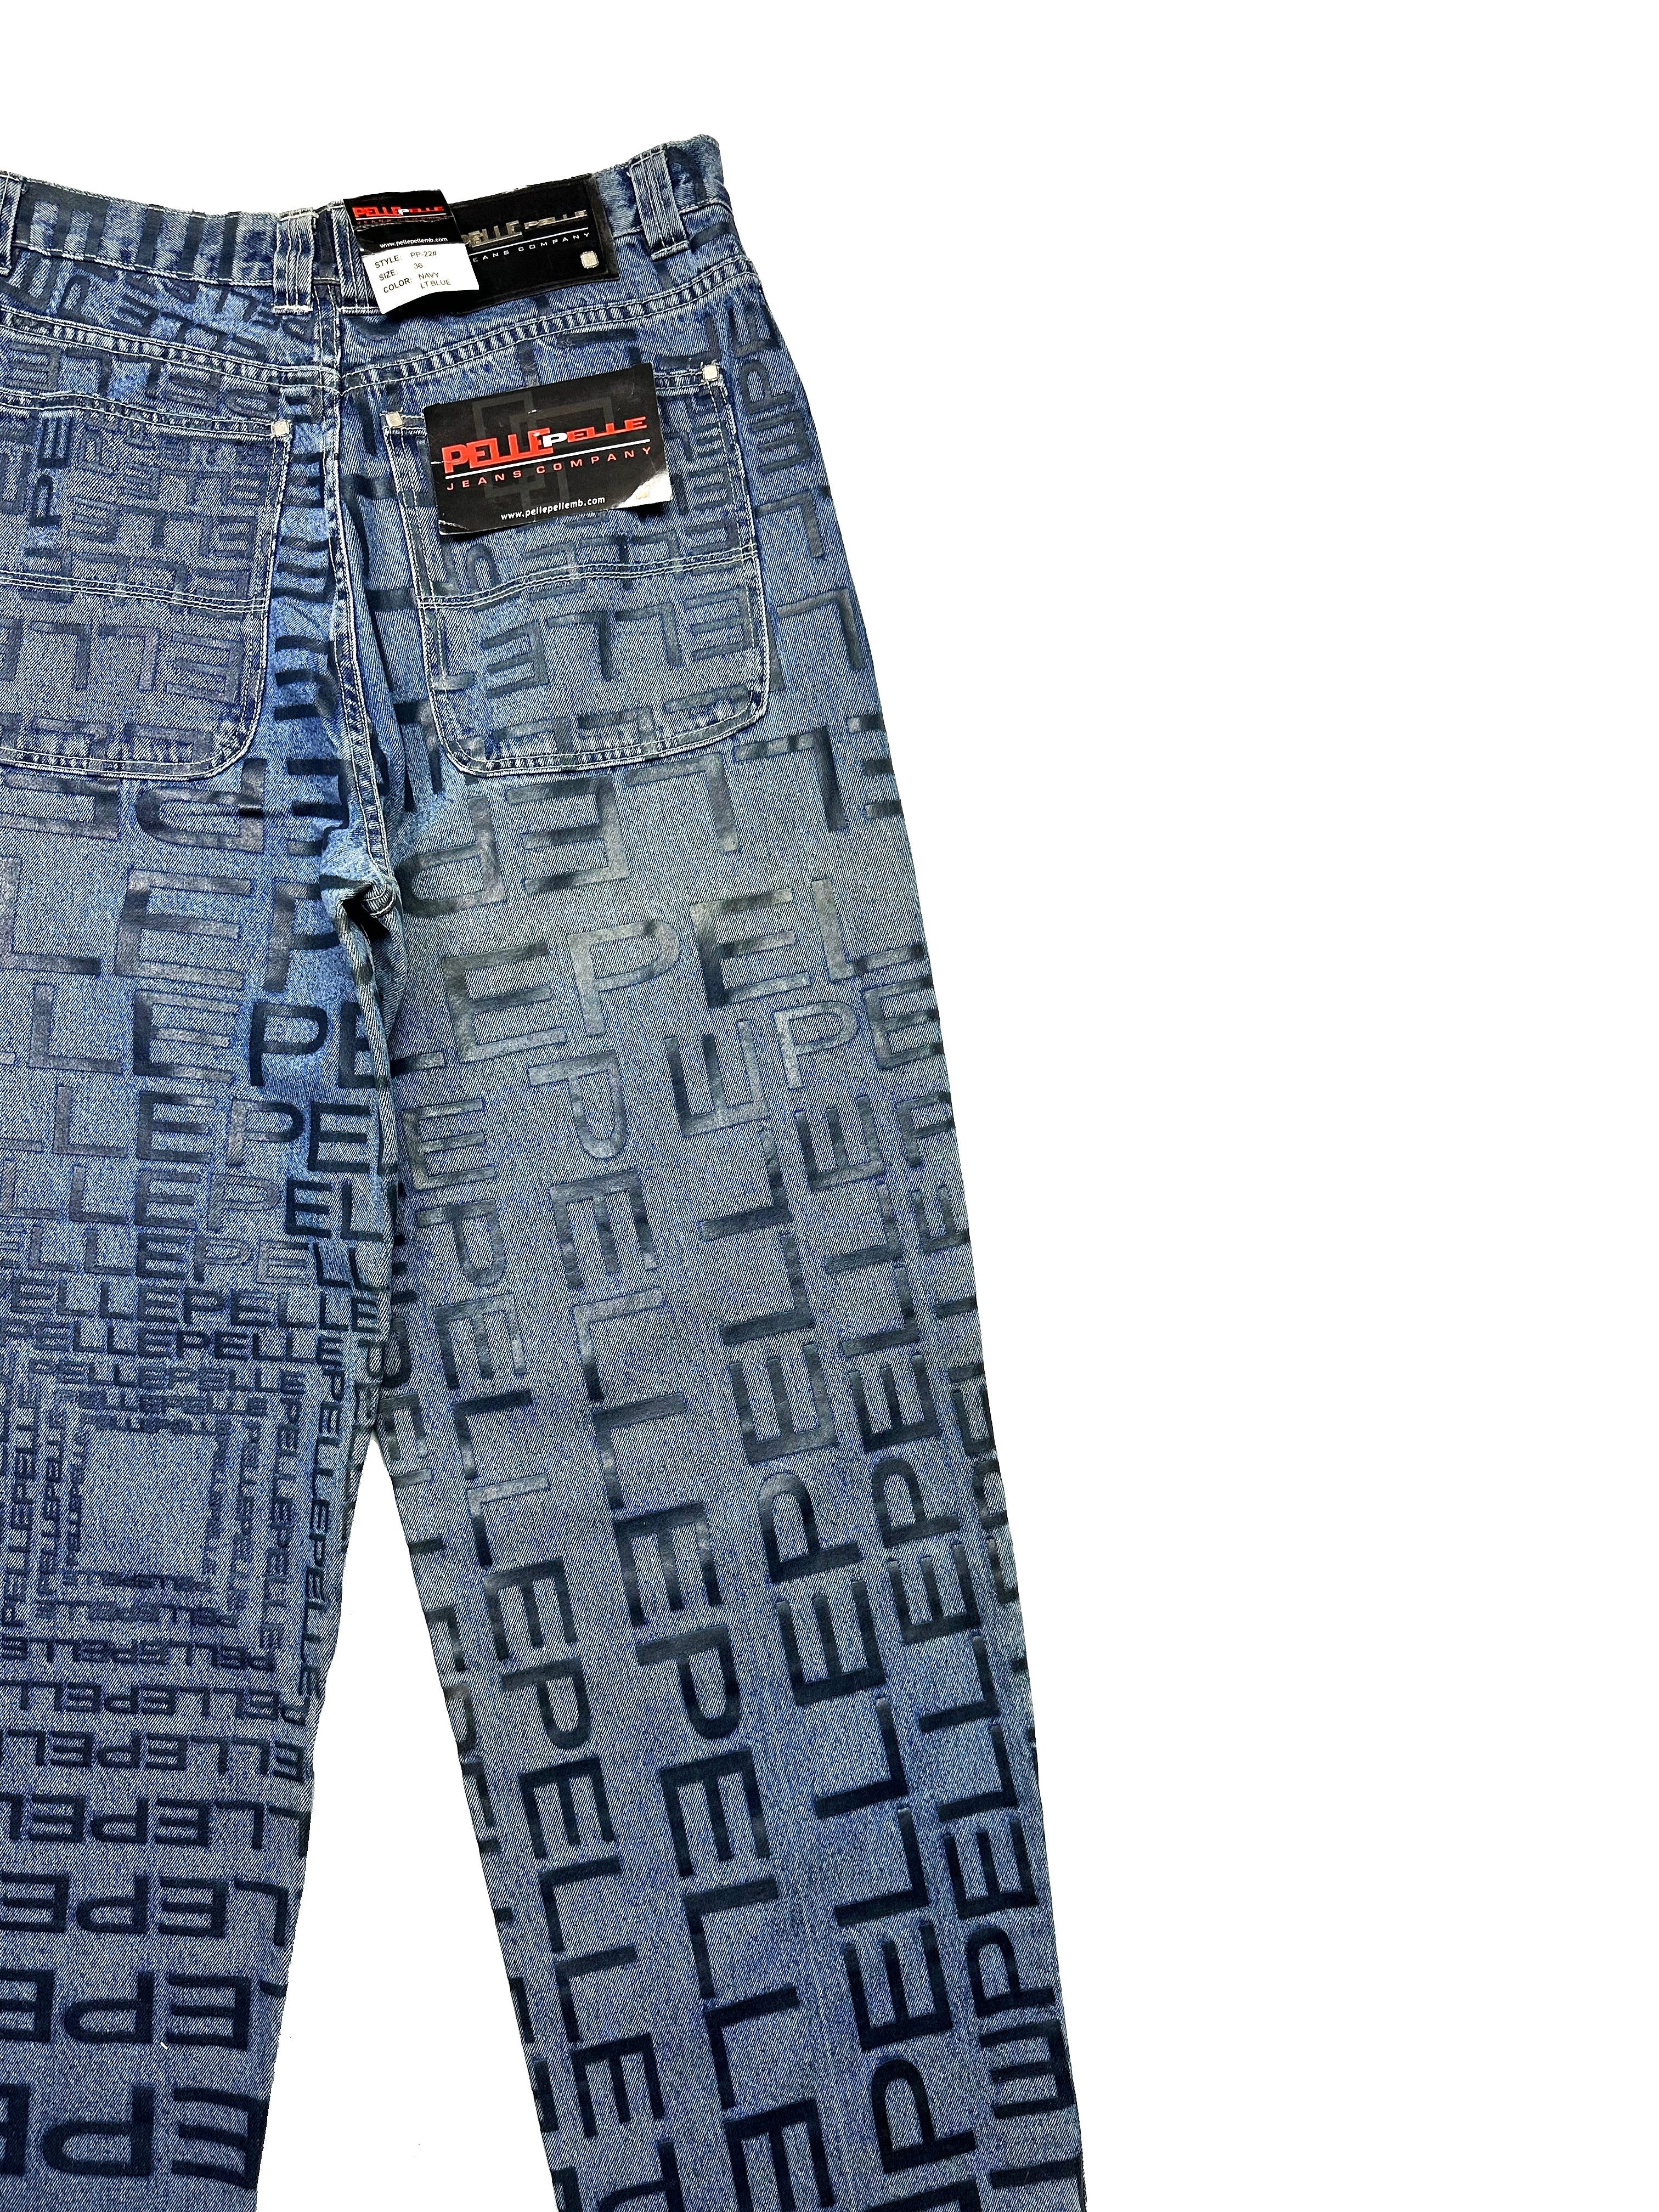 Pelle Pelle Spell Out Jeans BNWT 90's